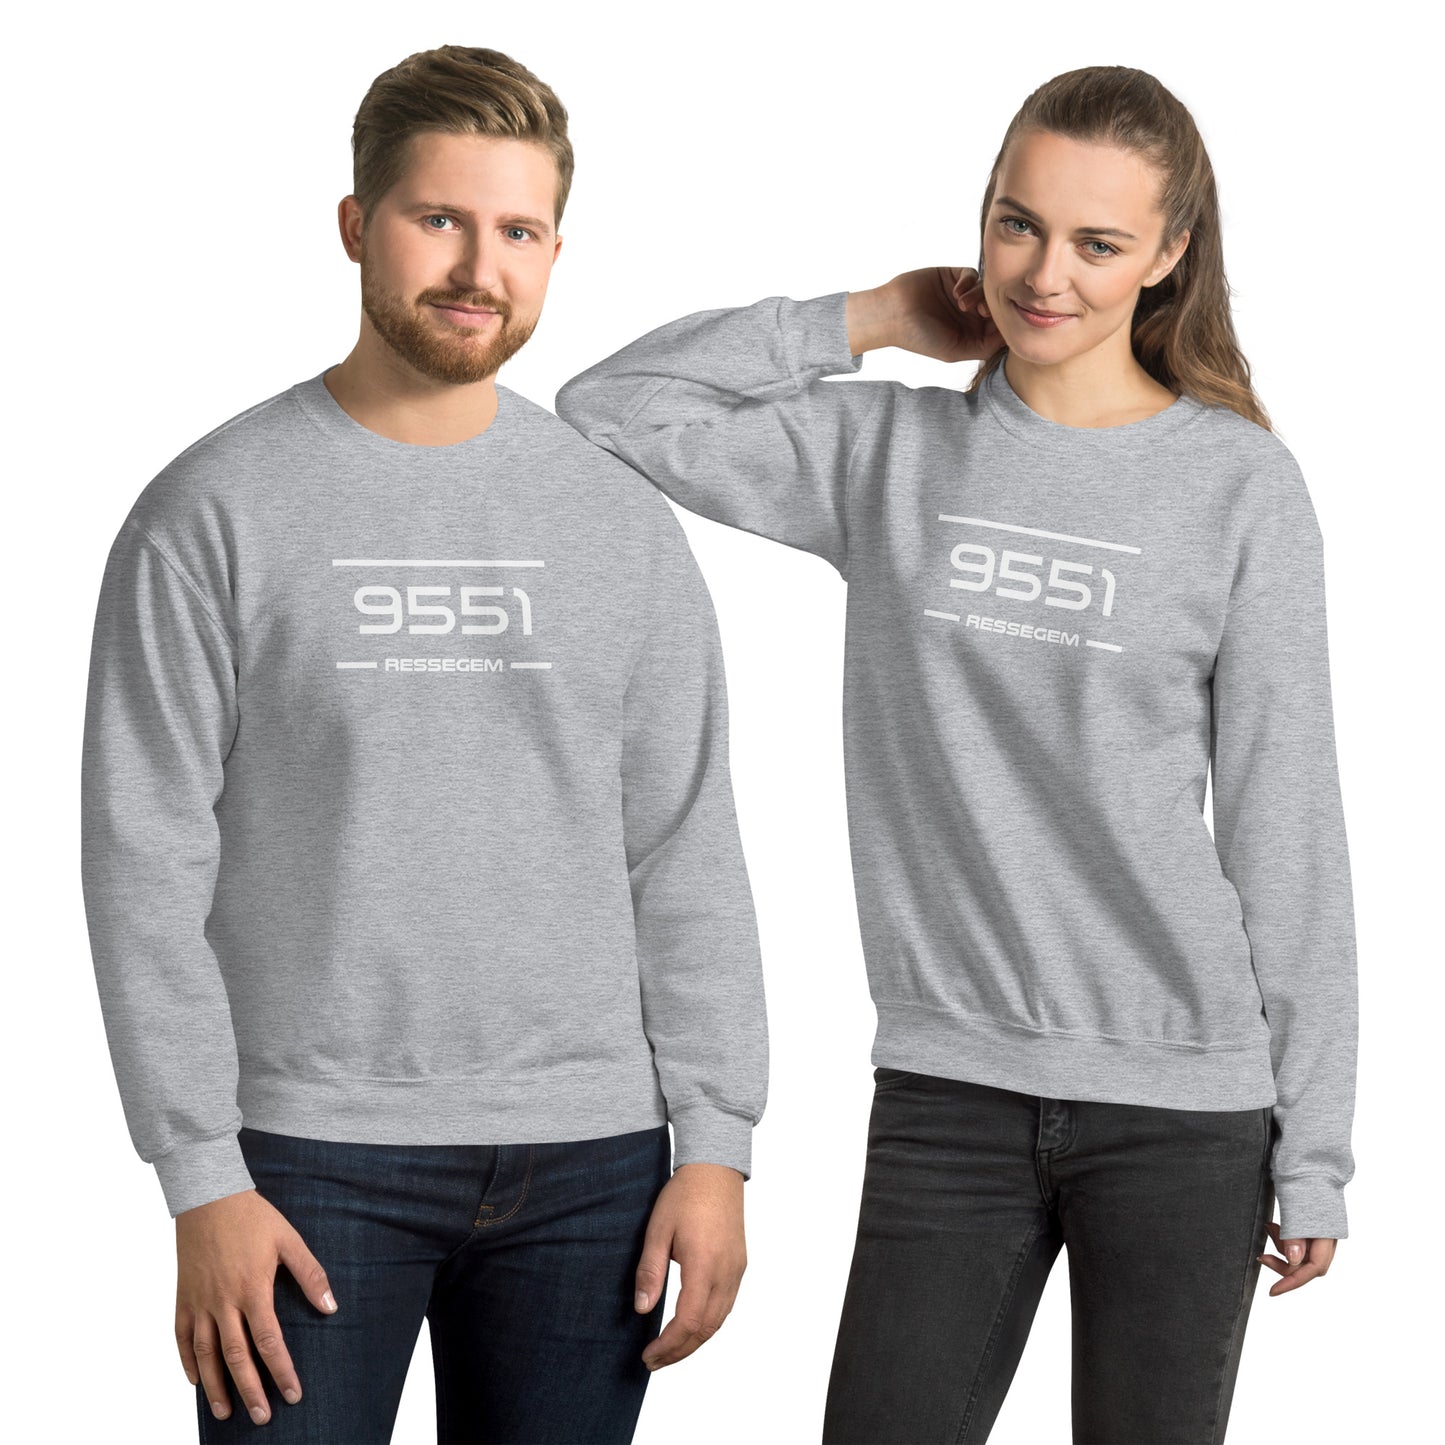 Sweater - 9551 - Ressegem (M/V)